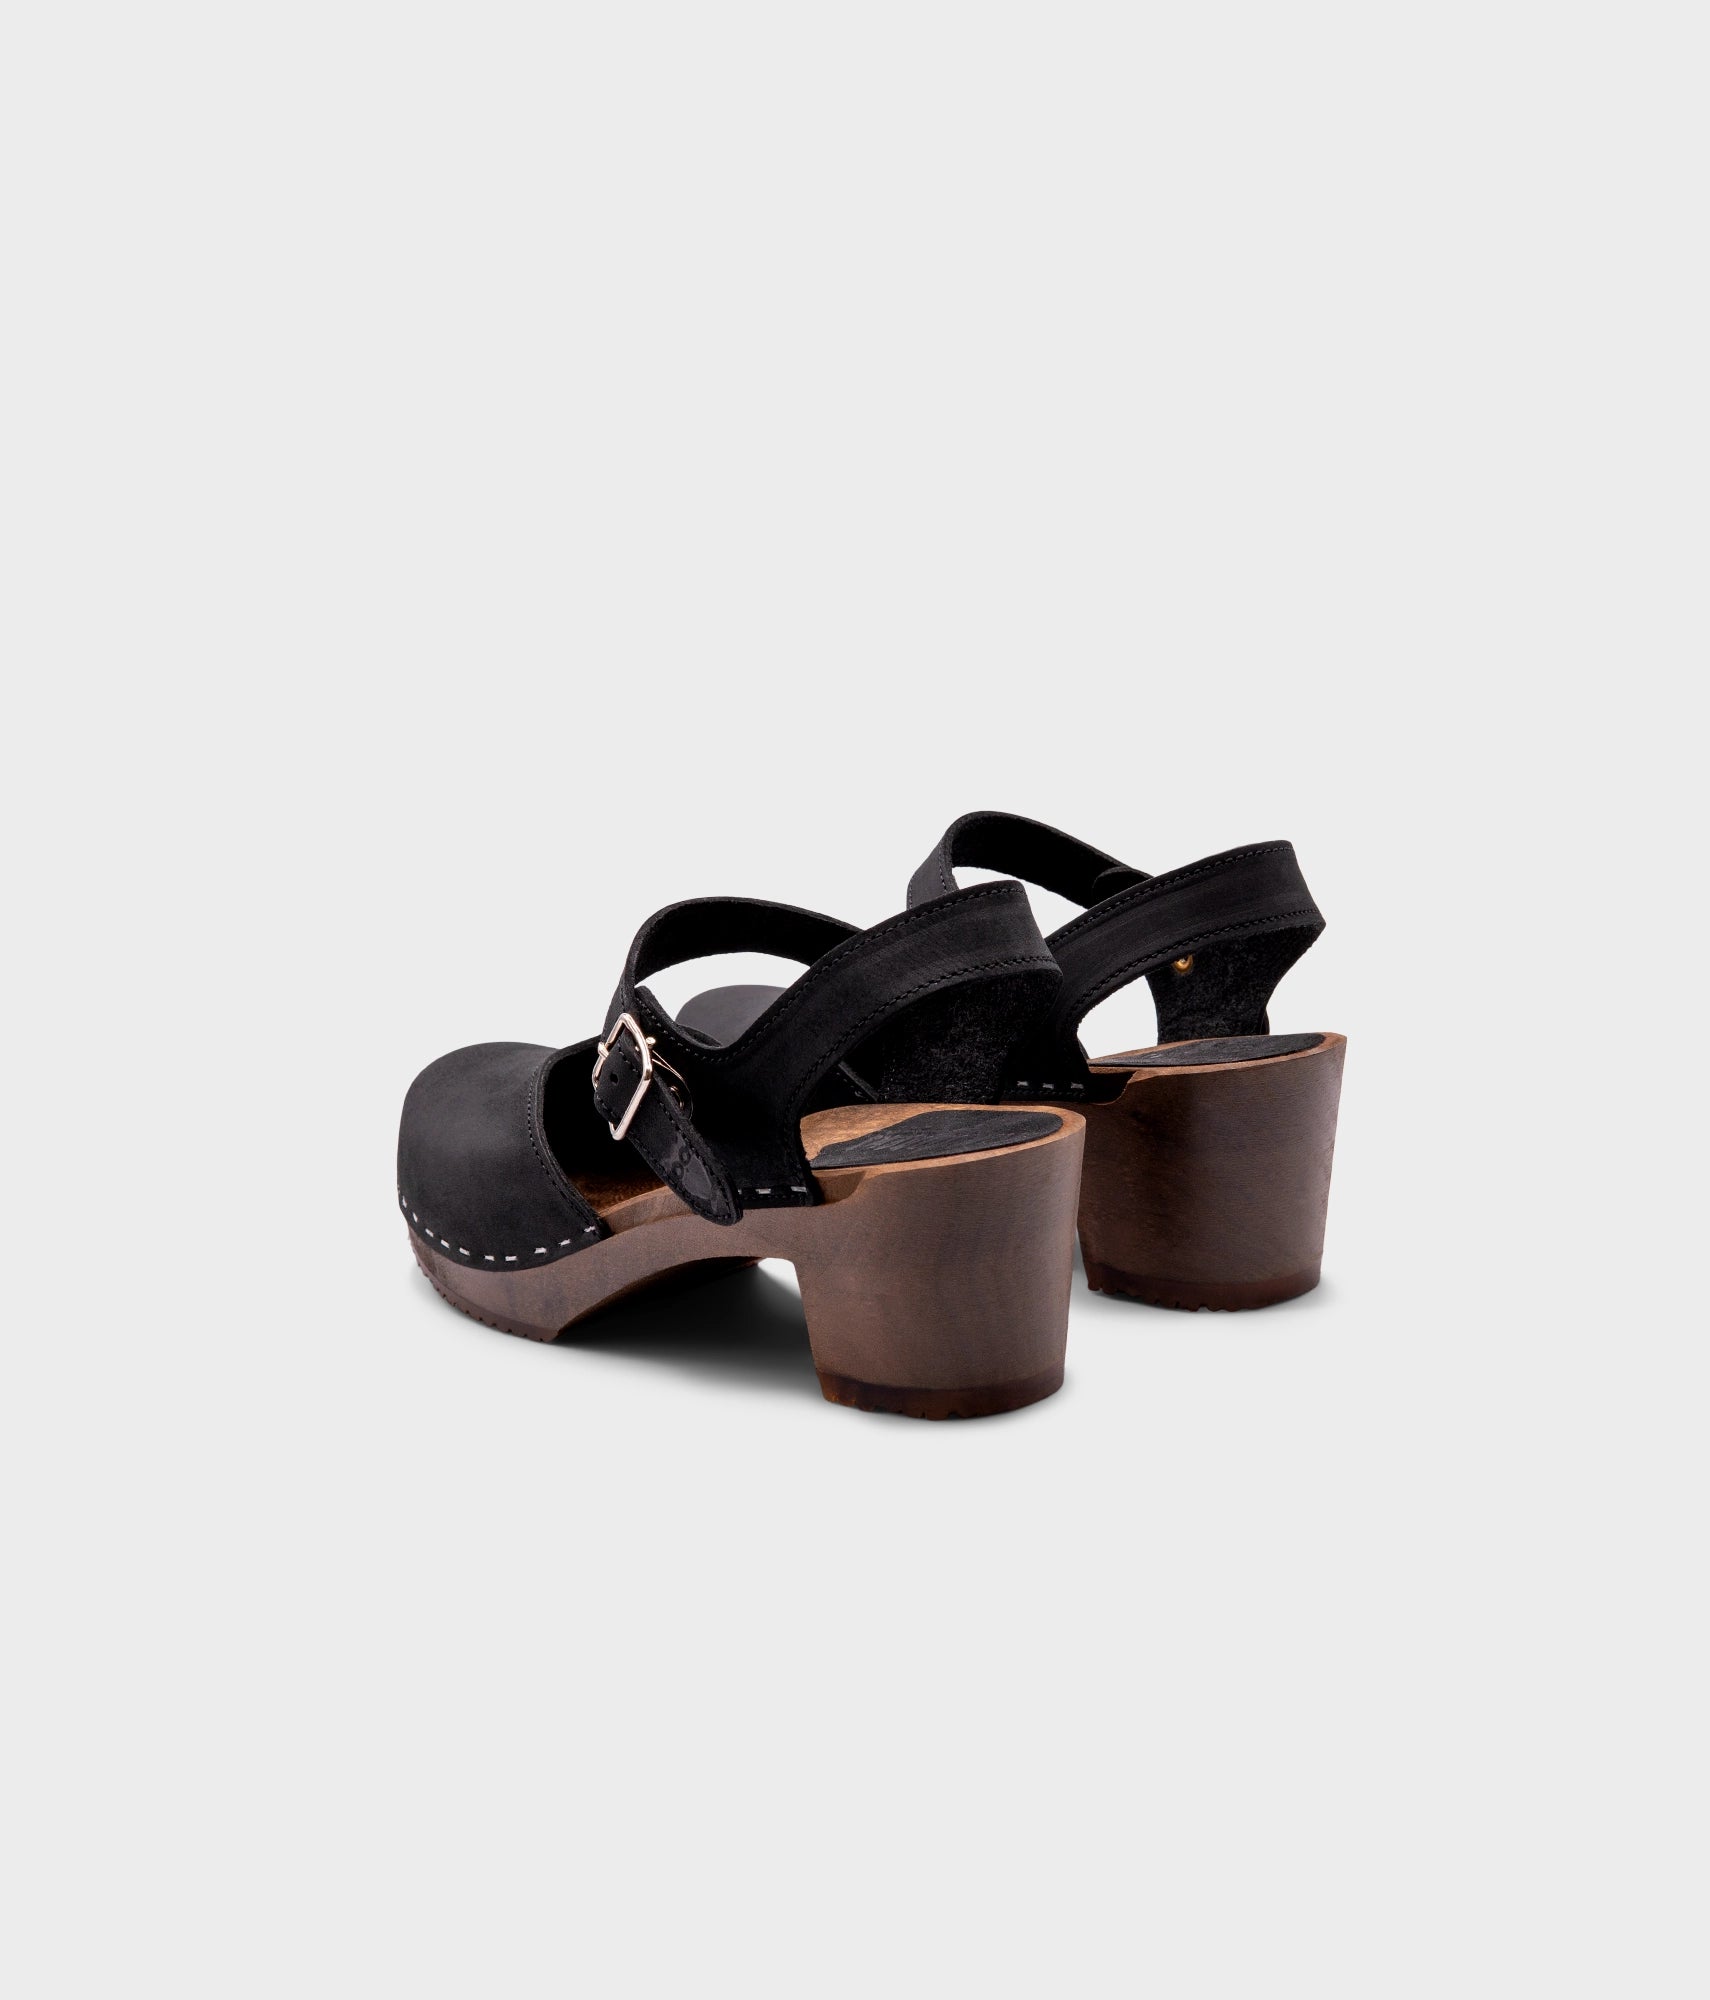 high heeled closed-toe clog sandal in black nubuck leather stapled on a dark wooden base